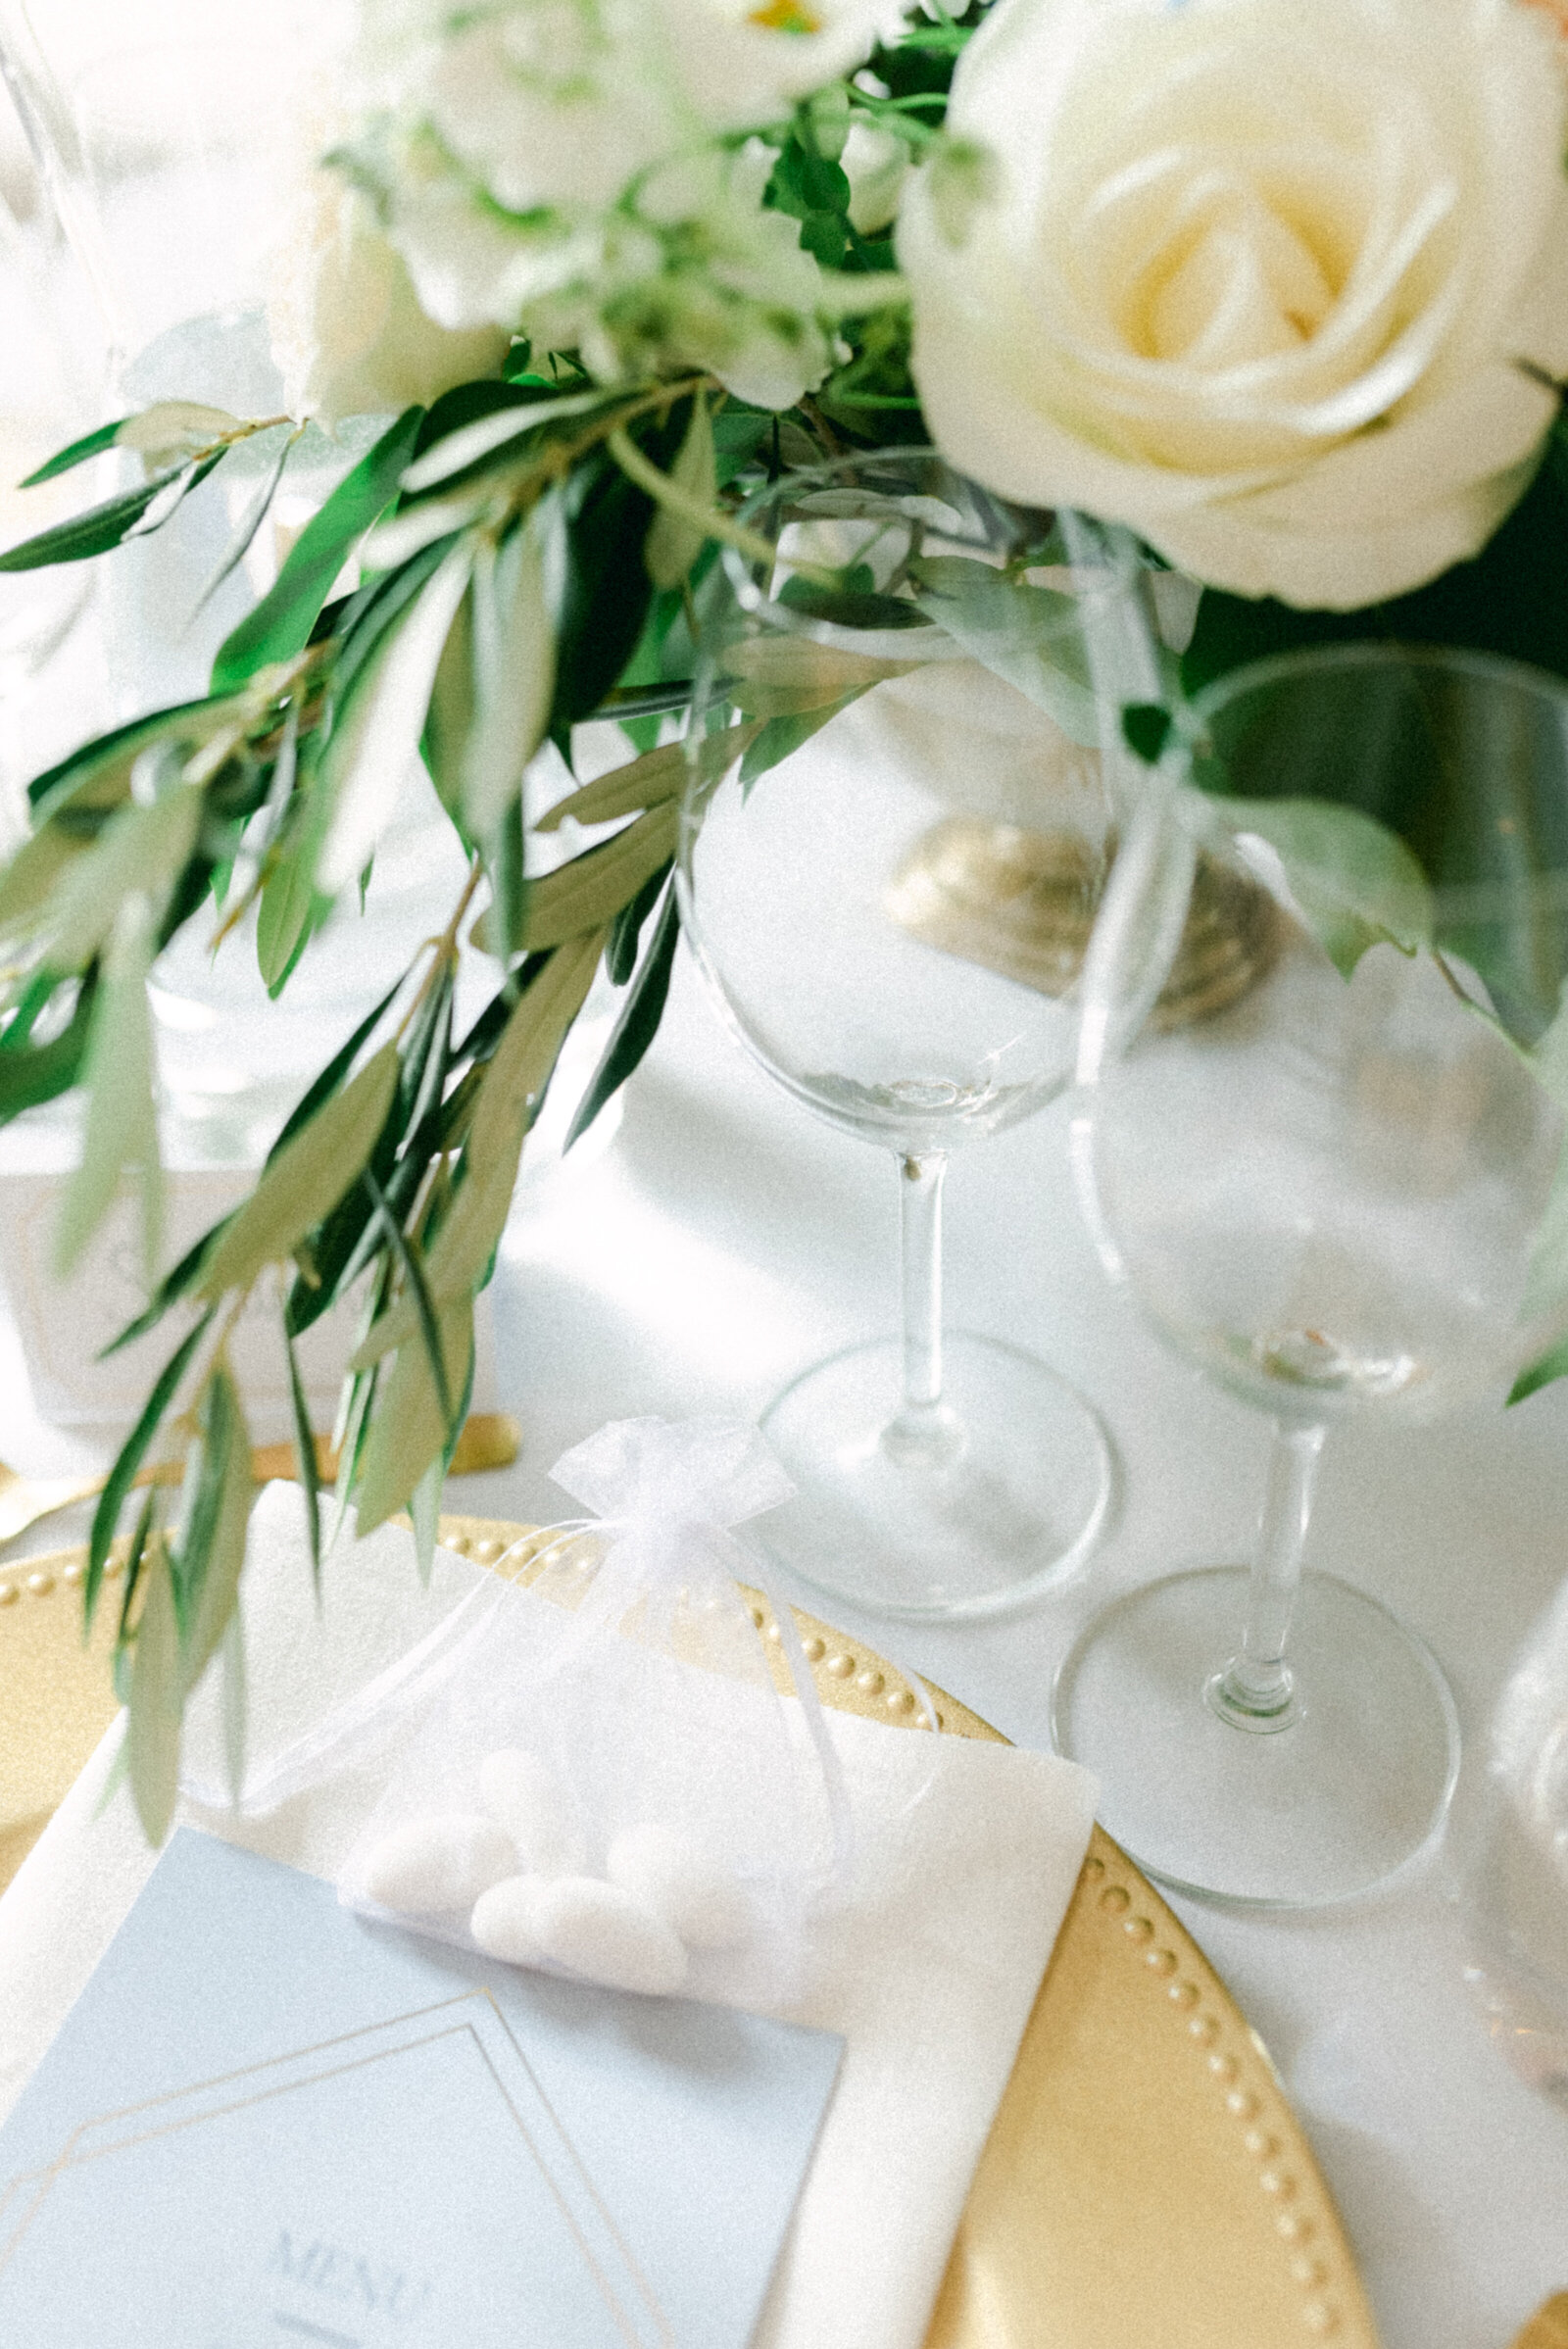 Wedding table setting photographed by wedding photographer Hannika Gabrielsson.